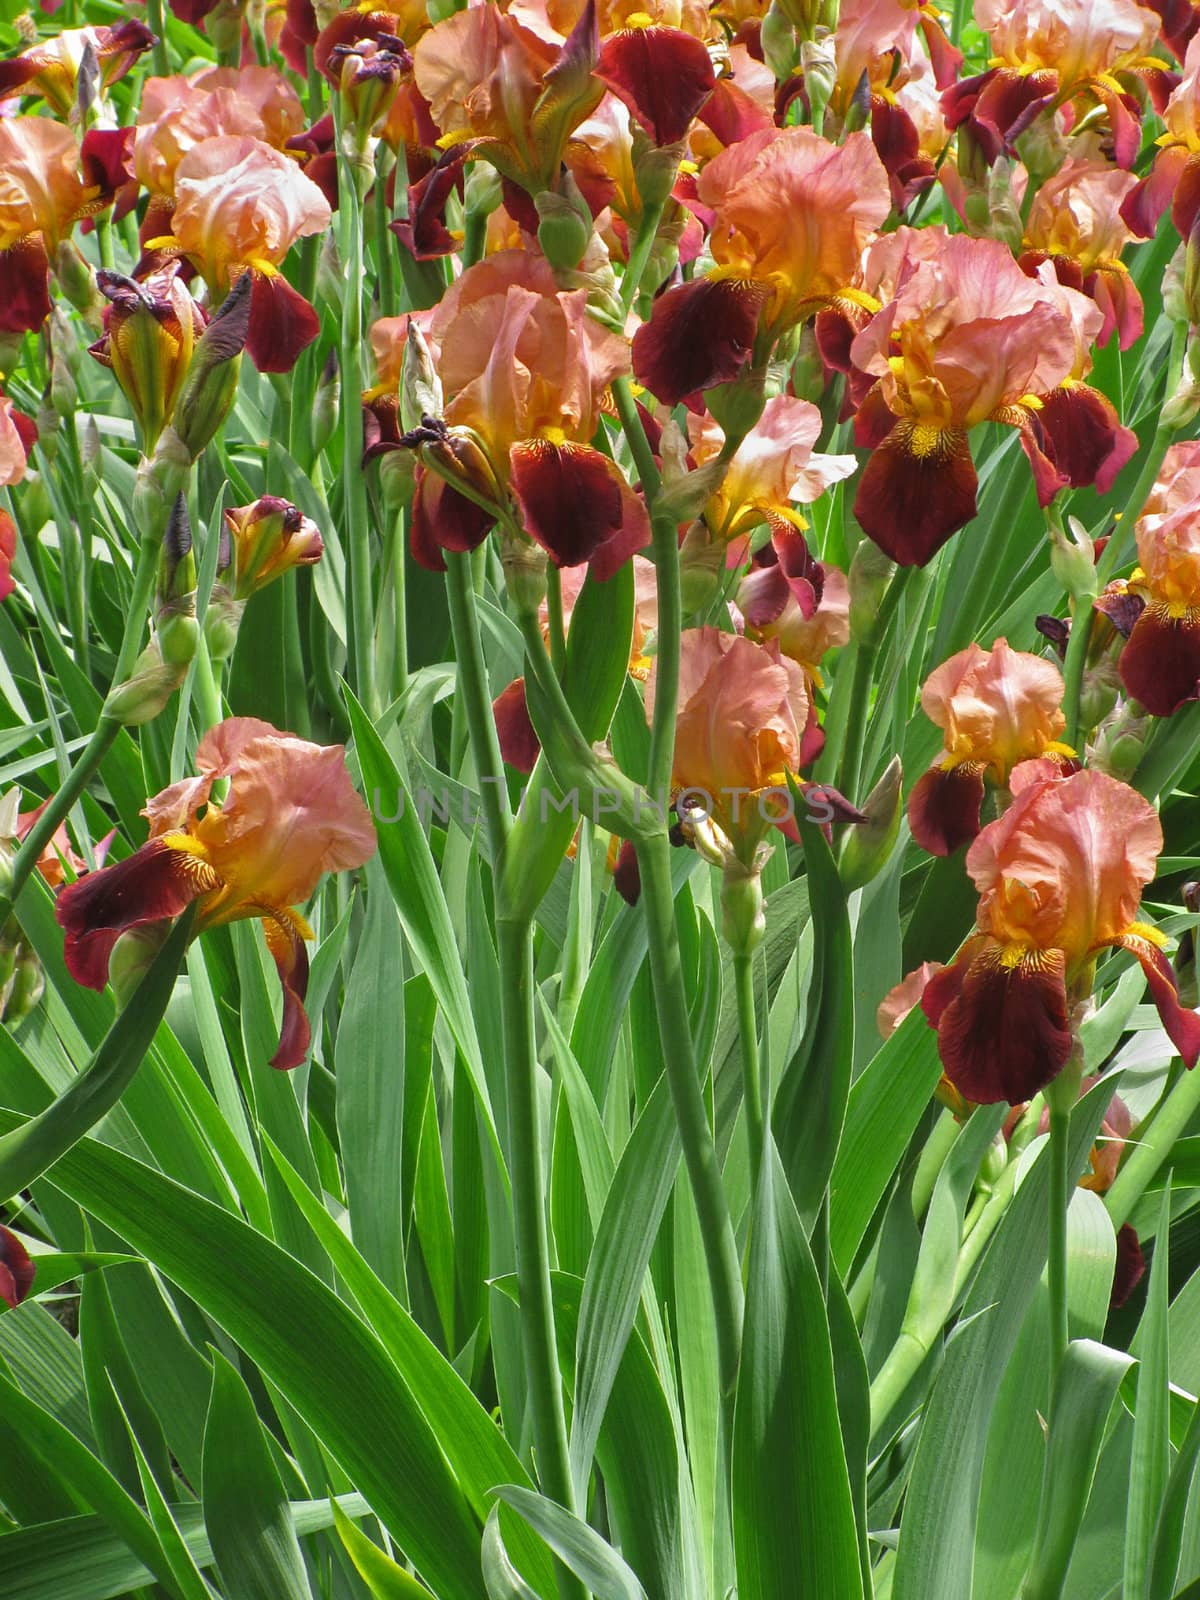 flowerbed with iris flowers